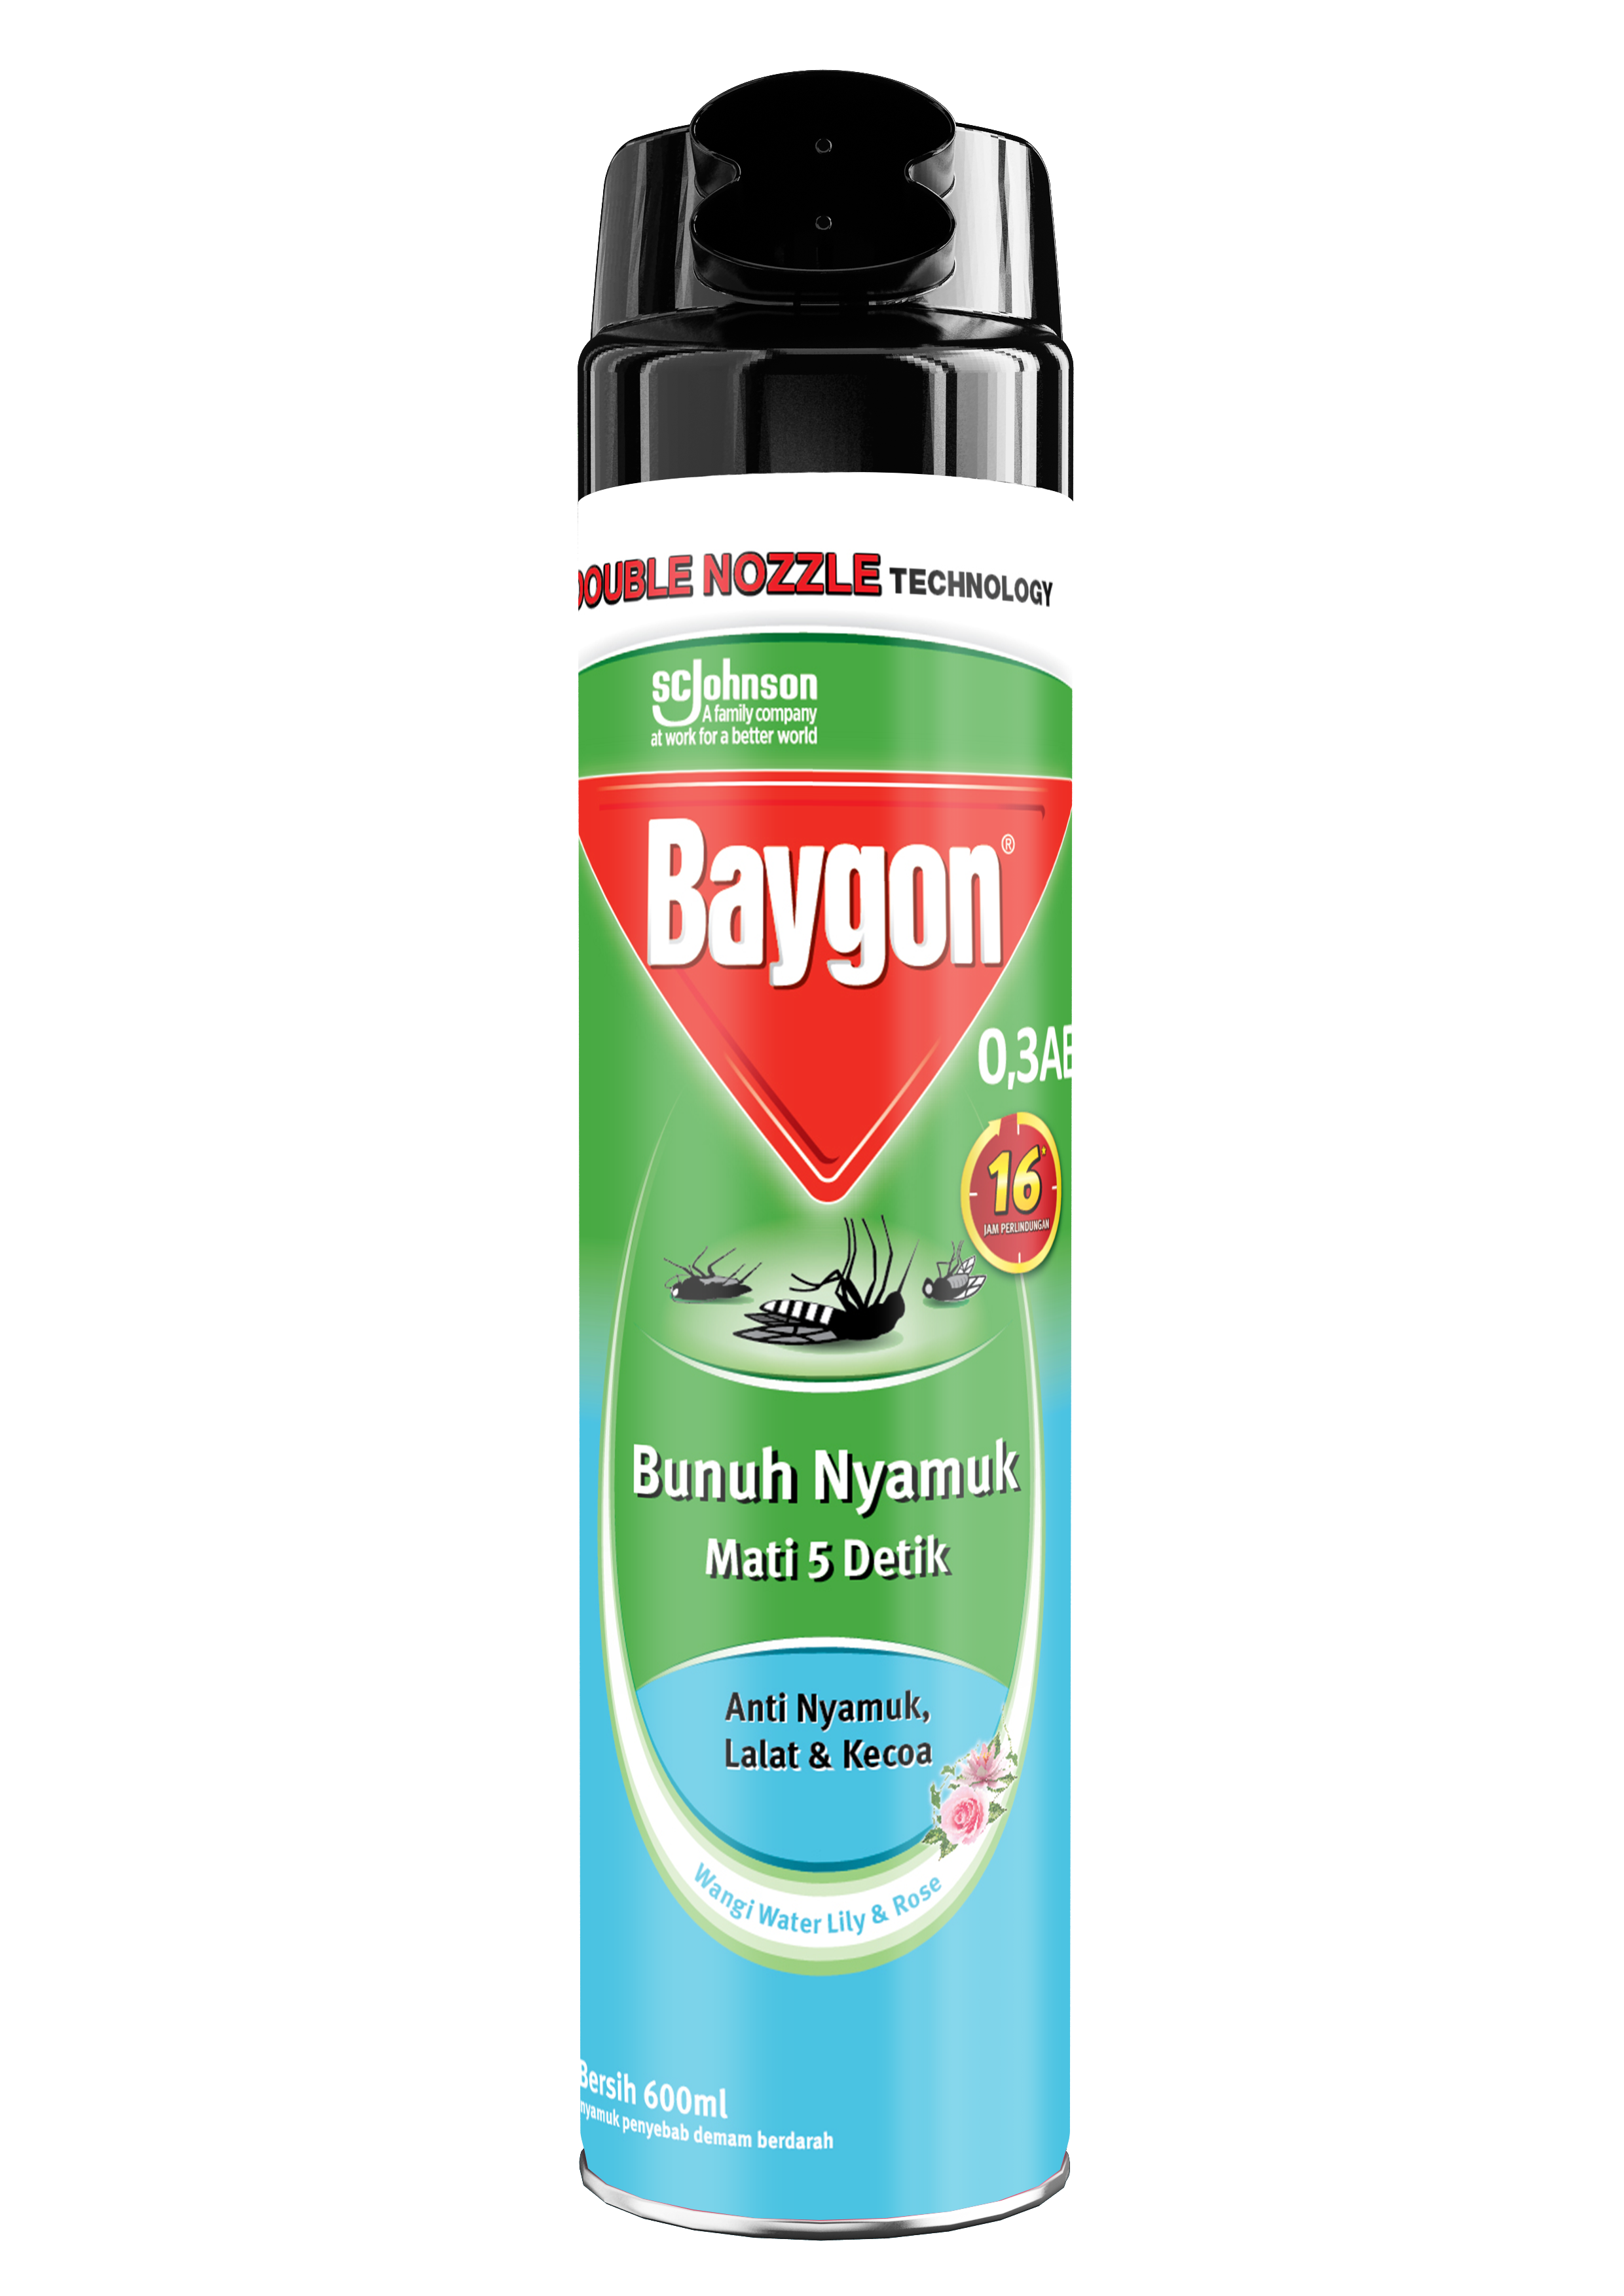 Baygon® Doube Nozzle Waterlily & Rose